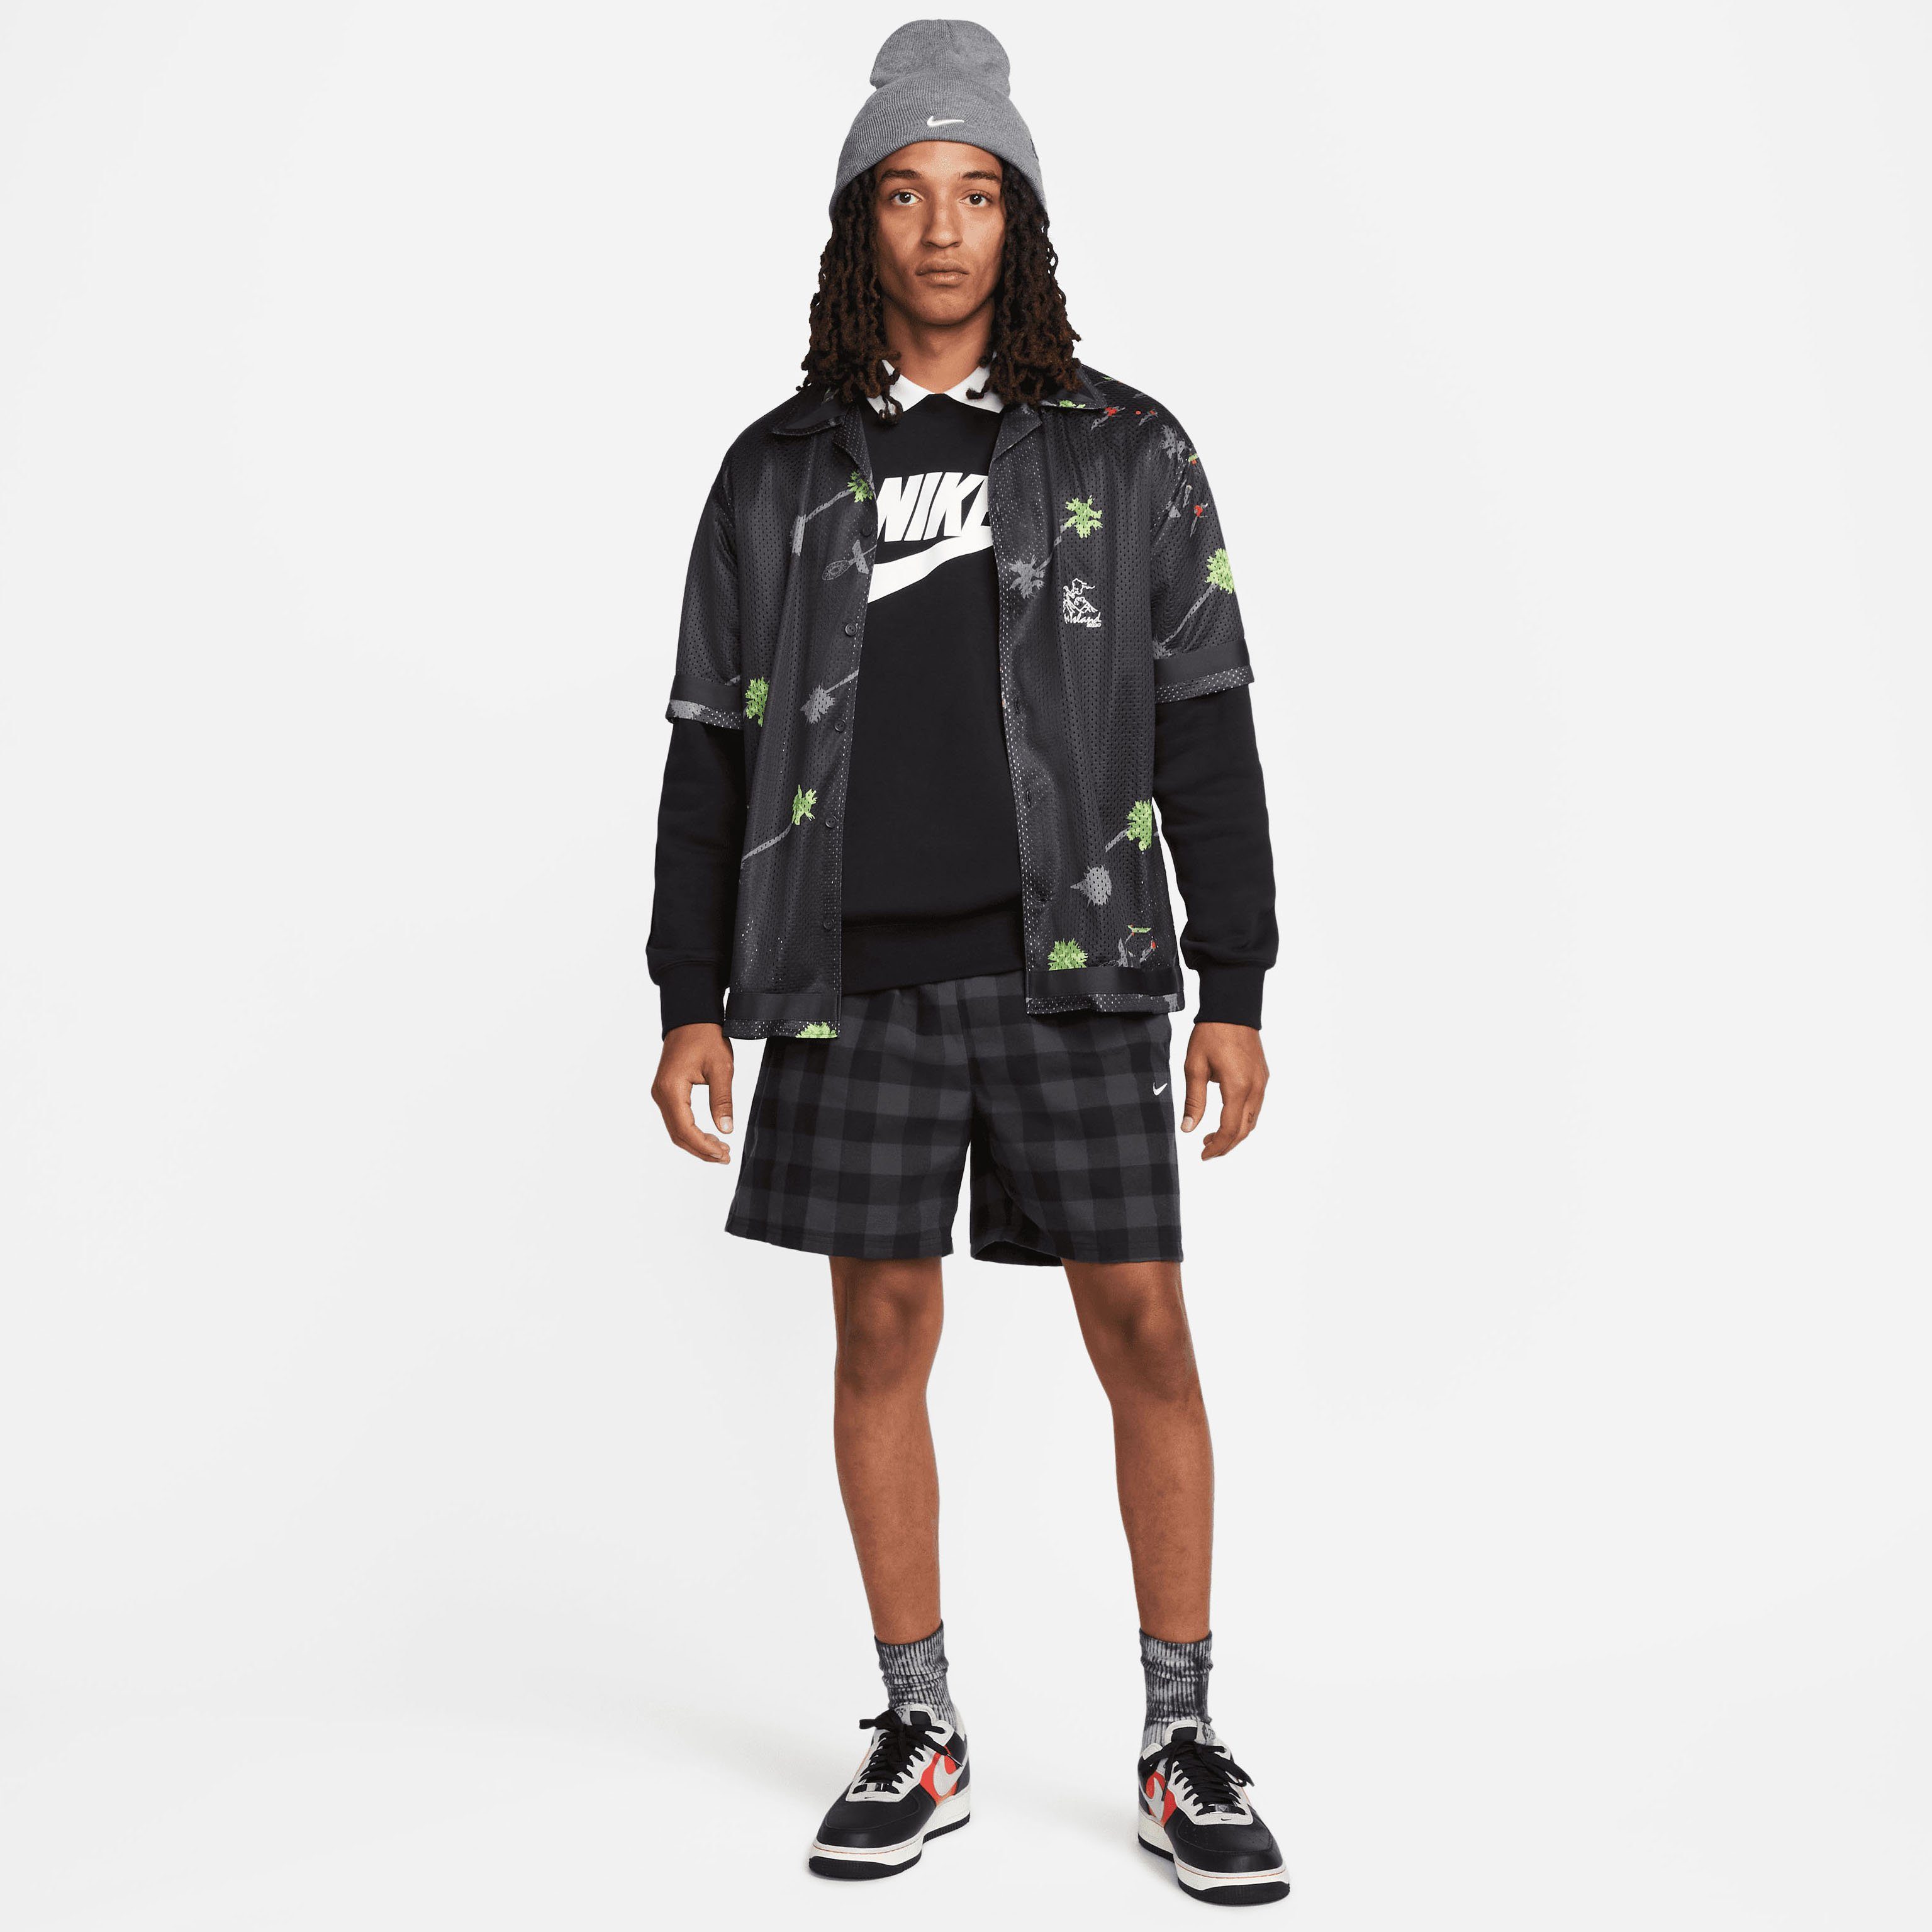 Sweatshirt Men's Nike Fleece Crew Graphic Club Sportswear BLACK